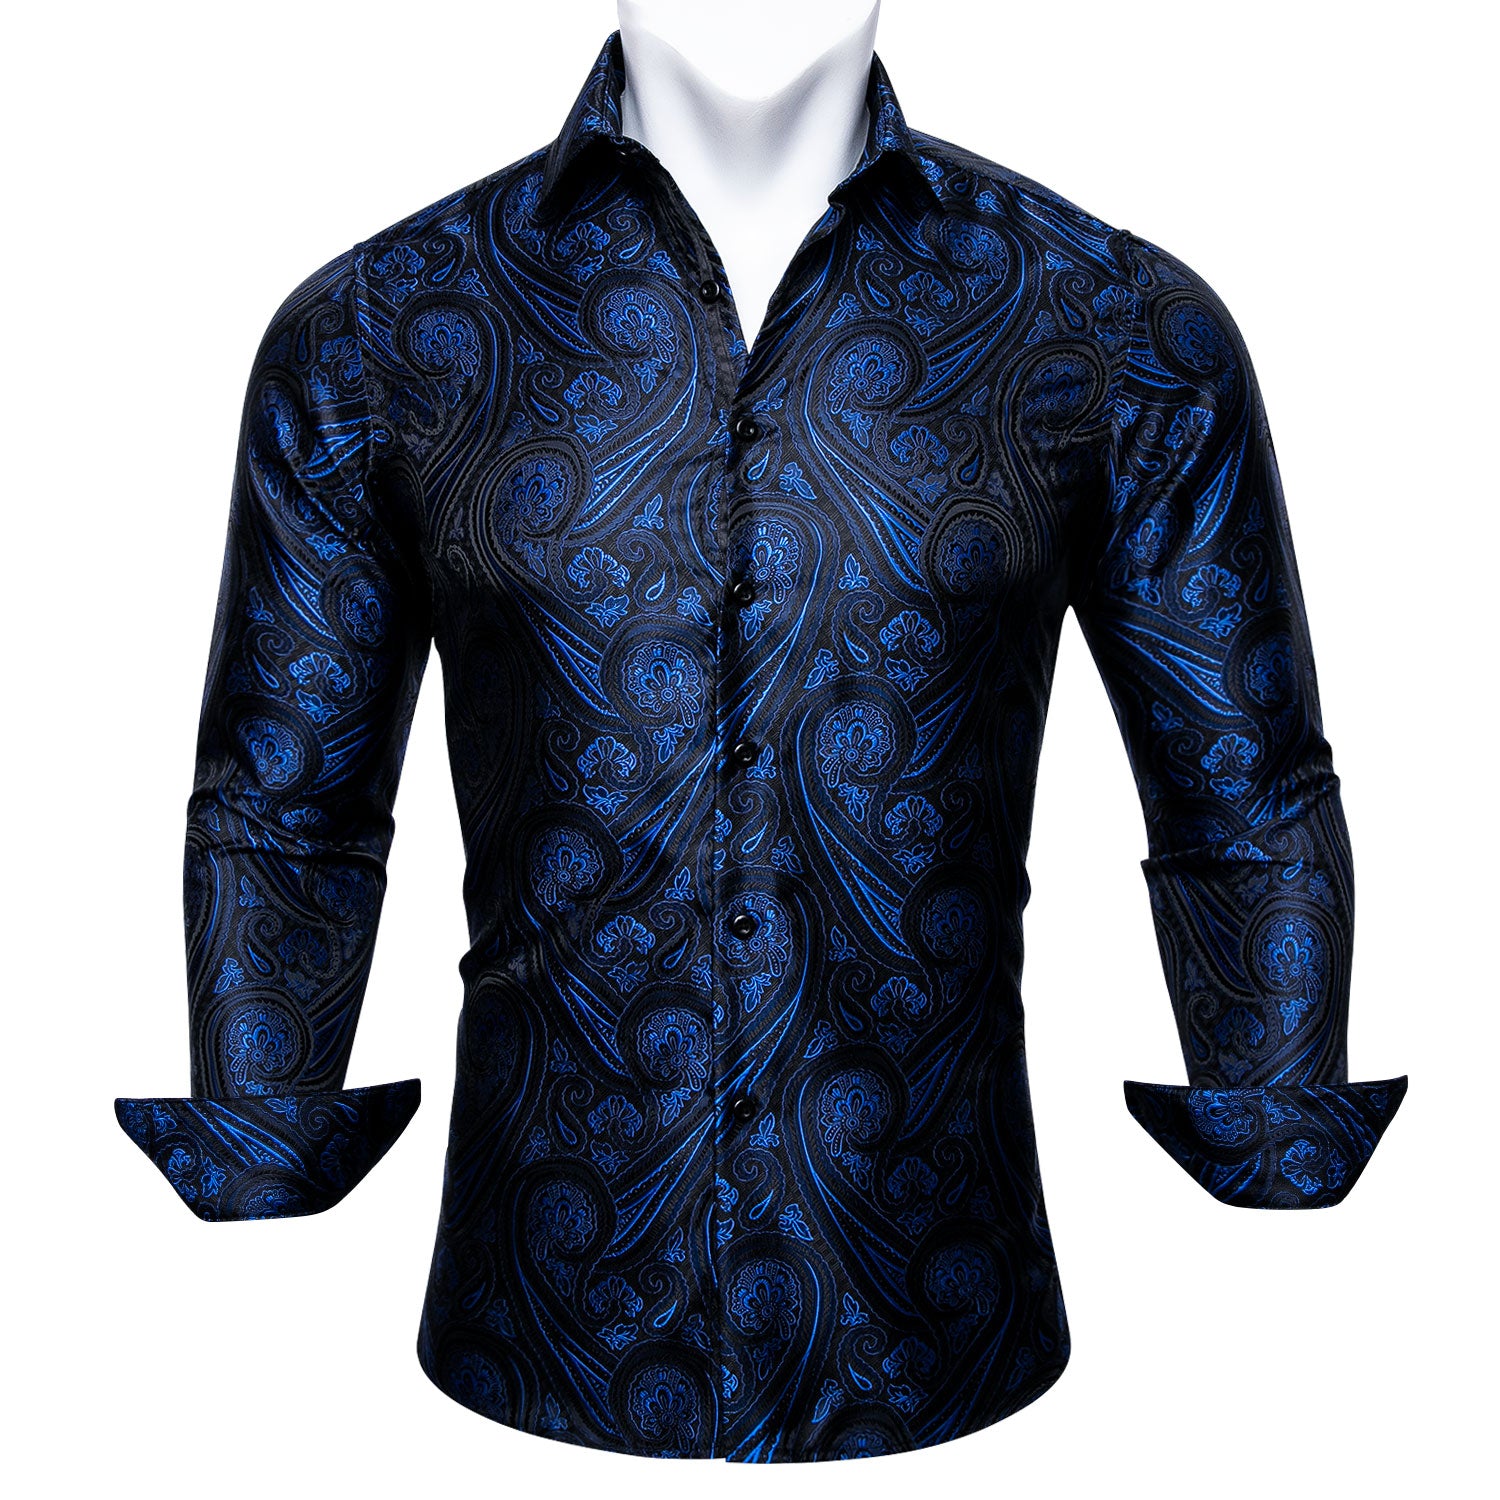 Barry.wang New Blue Paisley Silk Tribal Long Sleeve Daily Plus Size Men's Shirt